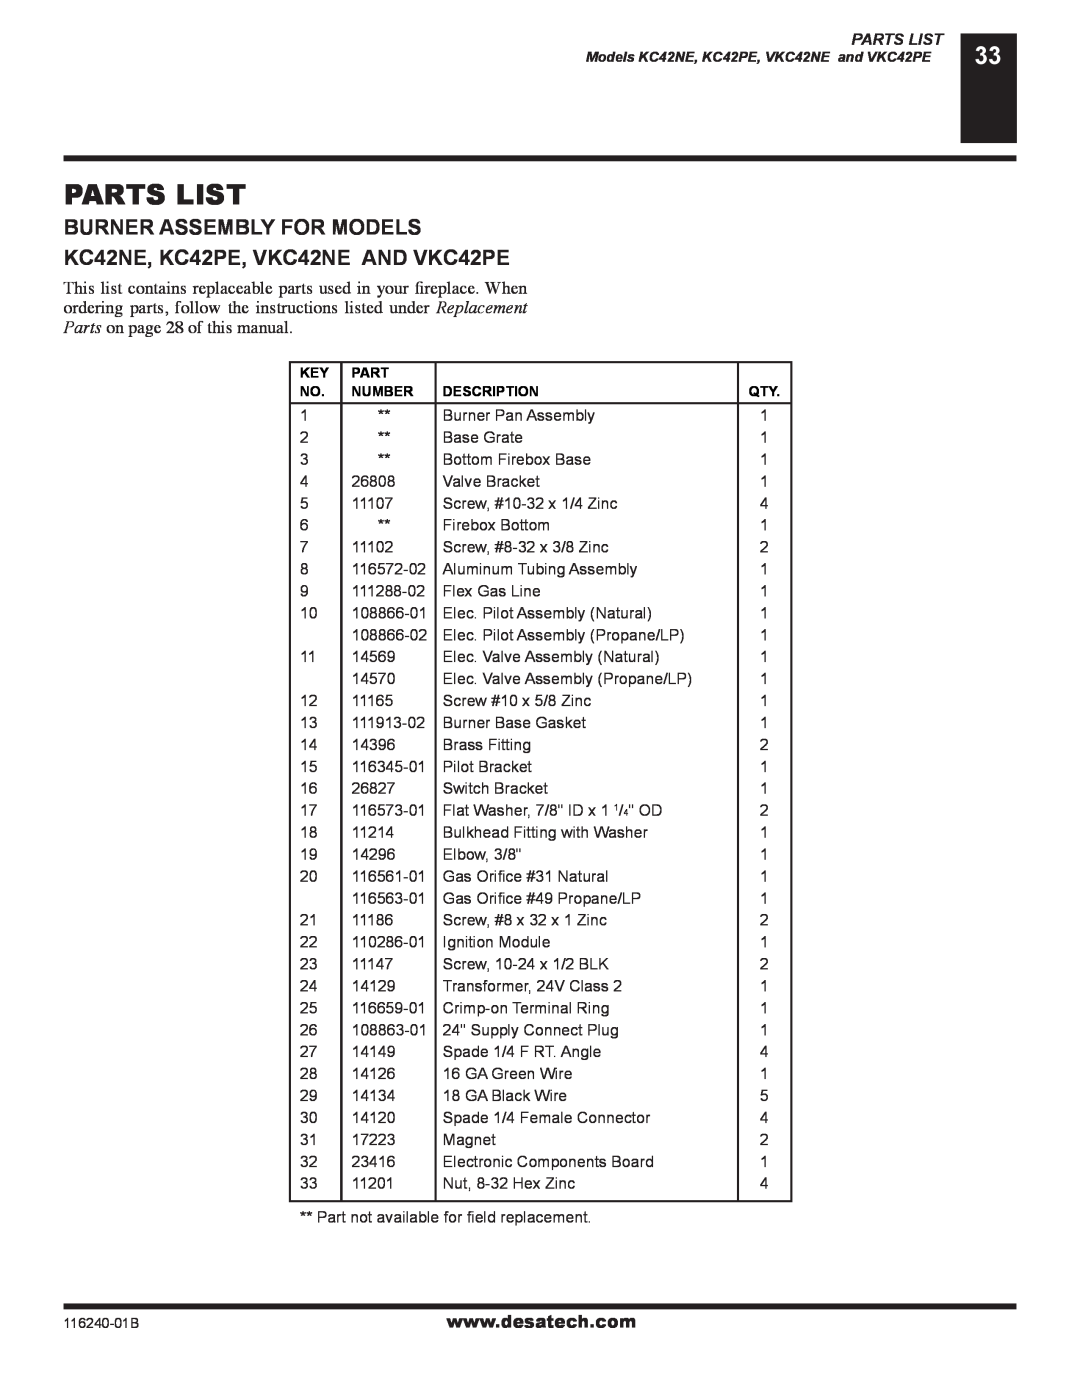 Desa (V)KC42NE SERIE installation manual Parts List, Burner Pan Assembly 